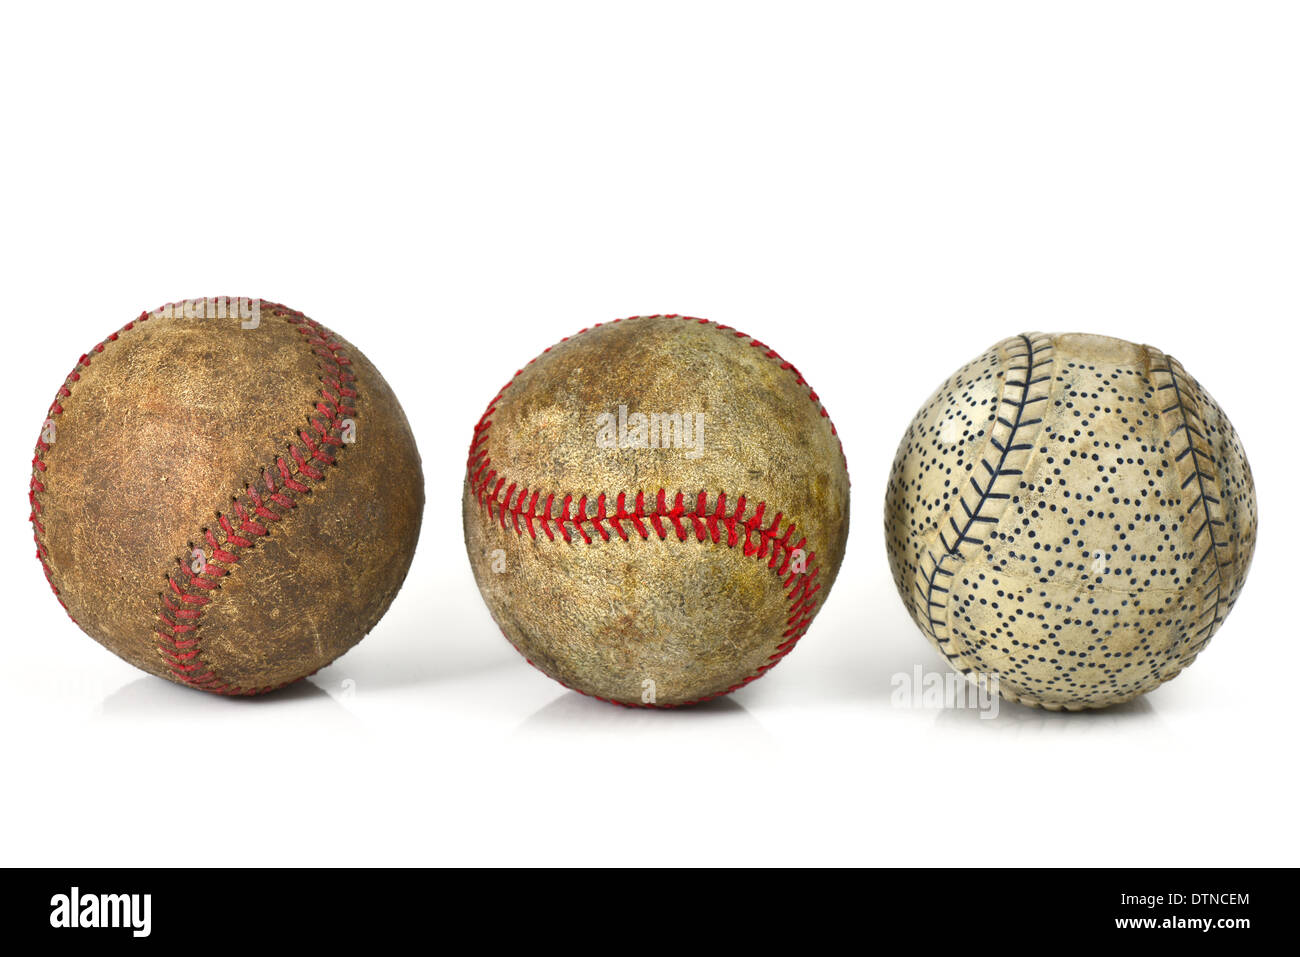 baseballs Stock Photo